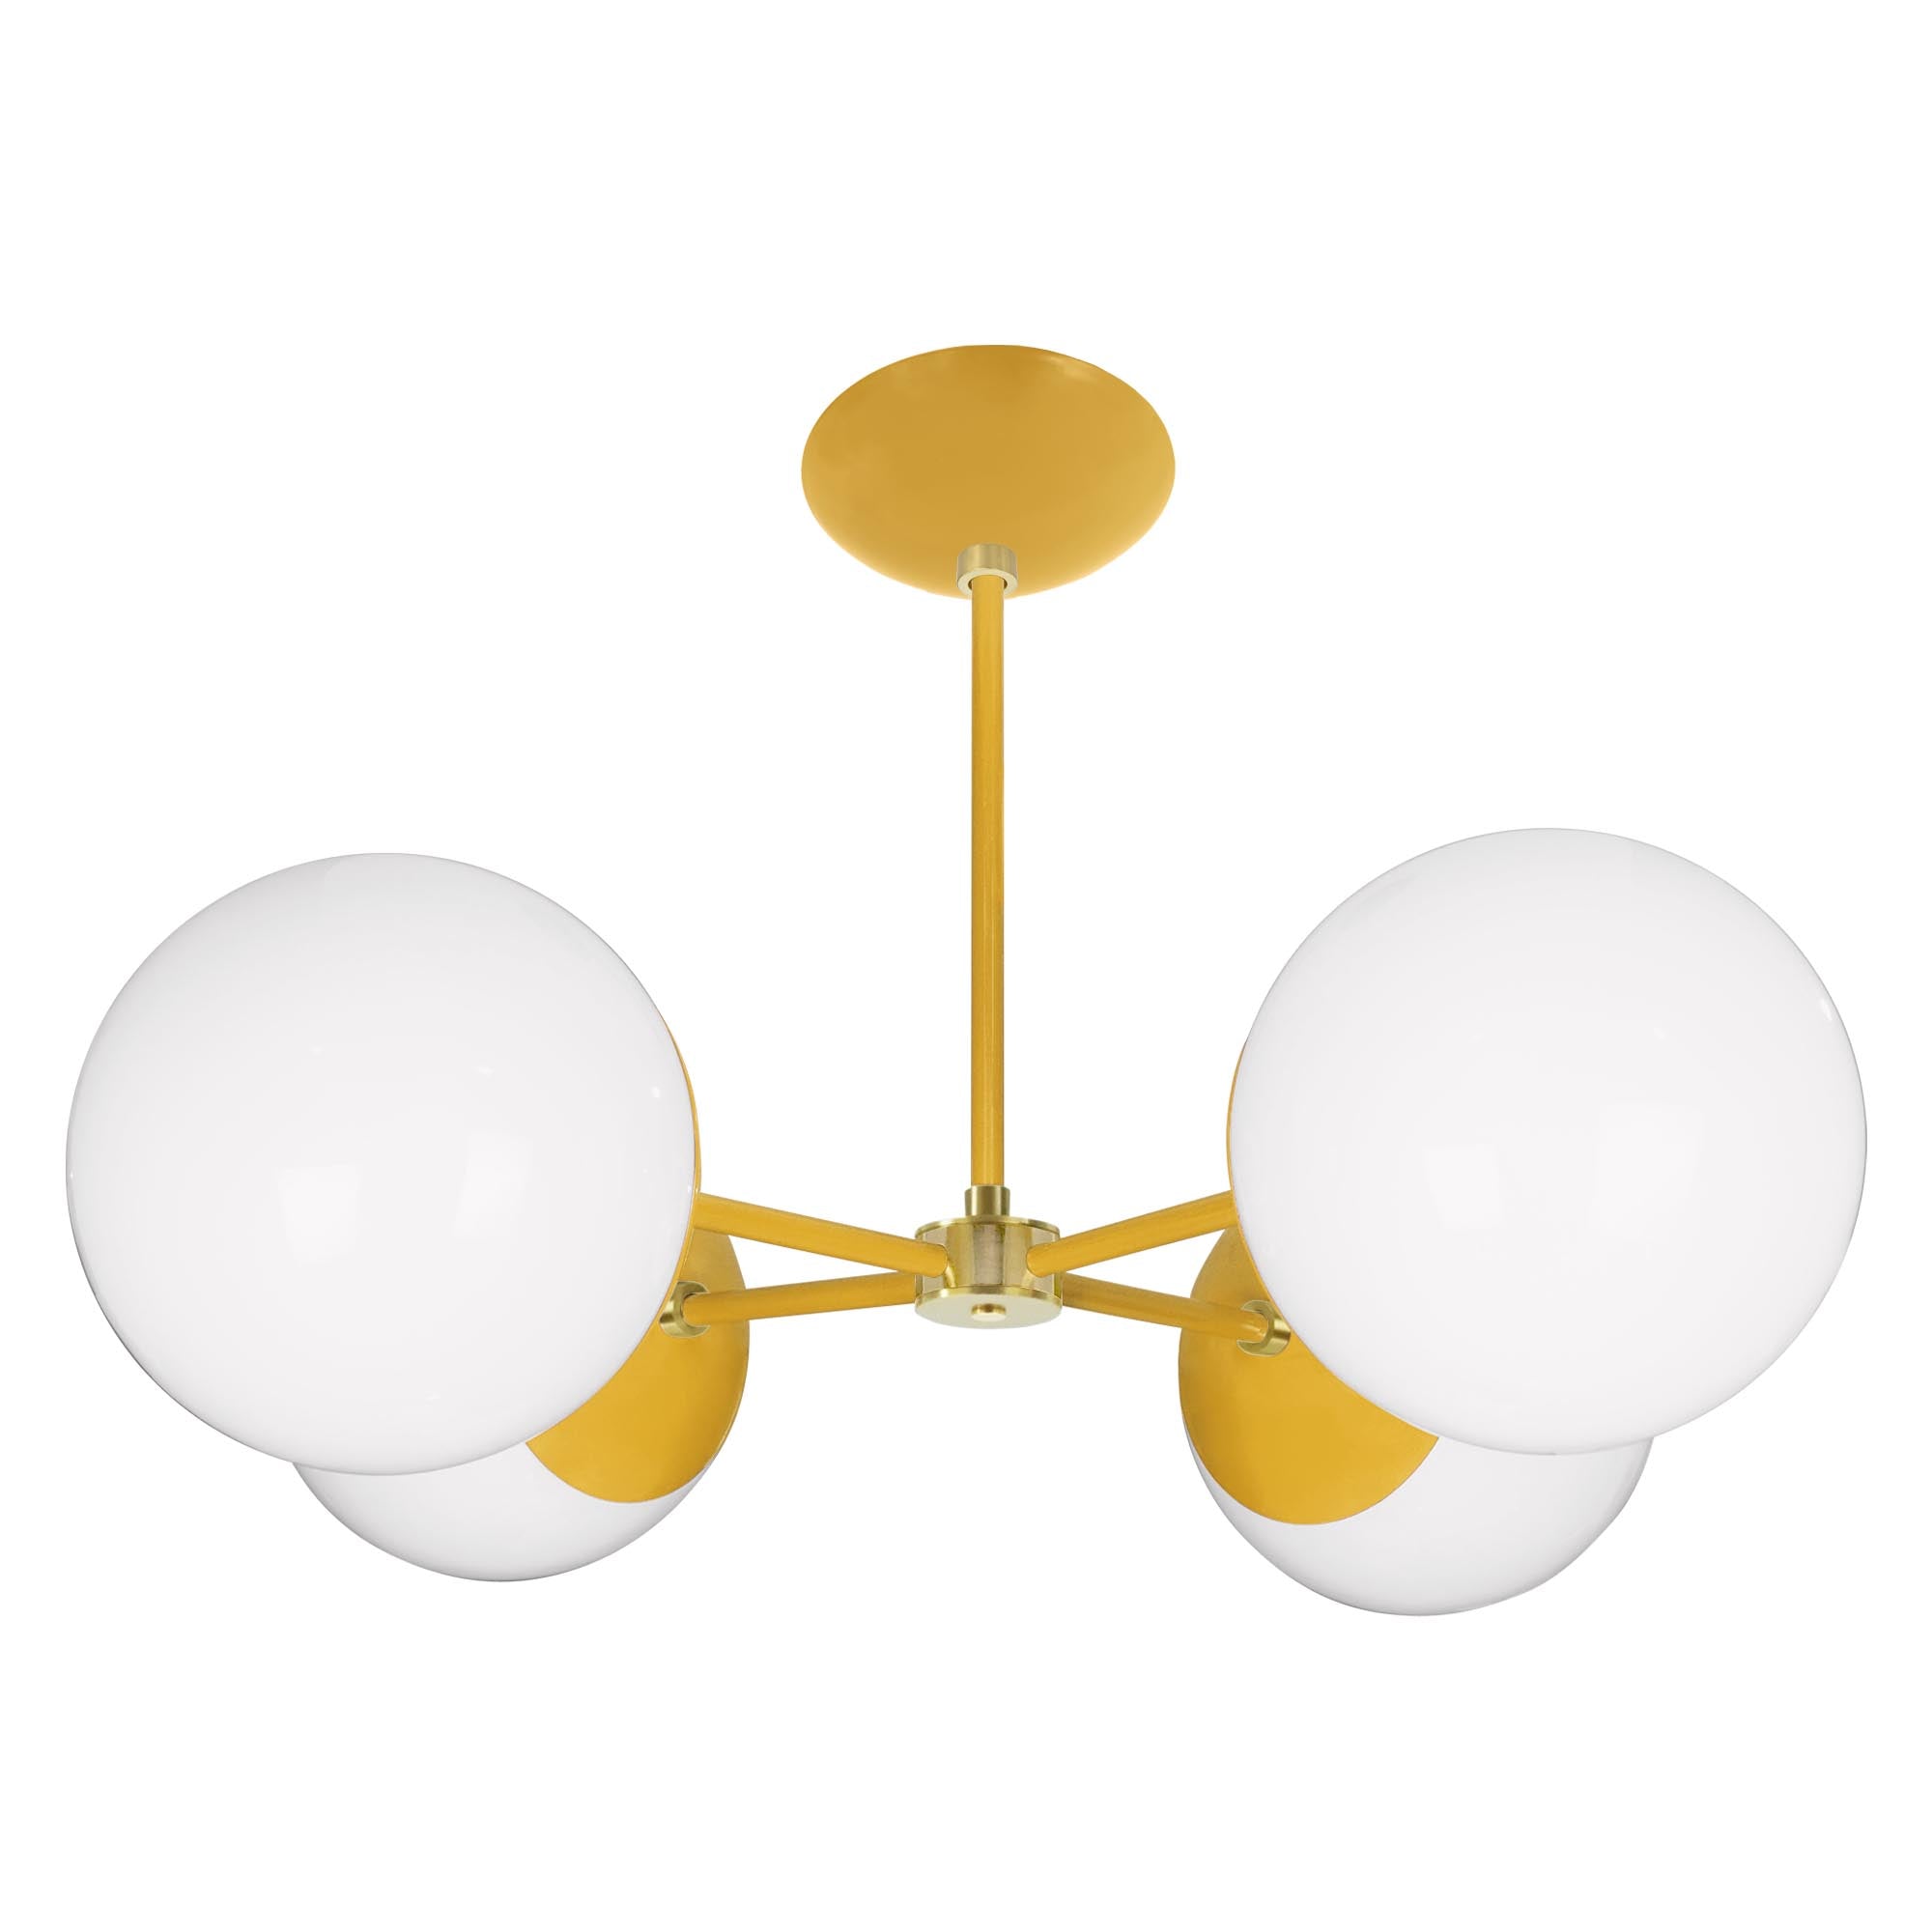 Brass and ochre color Big Orbi chandelier Dutton Brown lighting